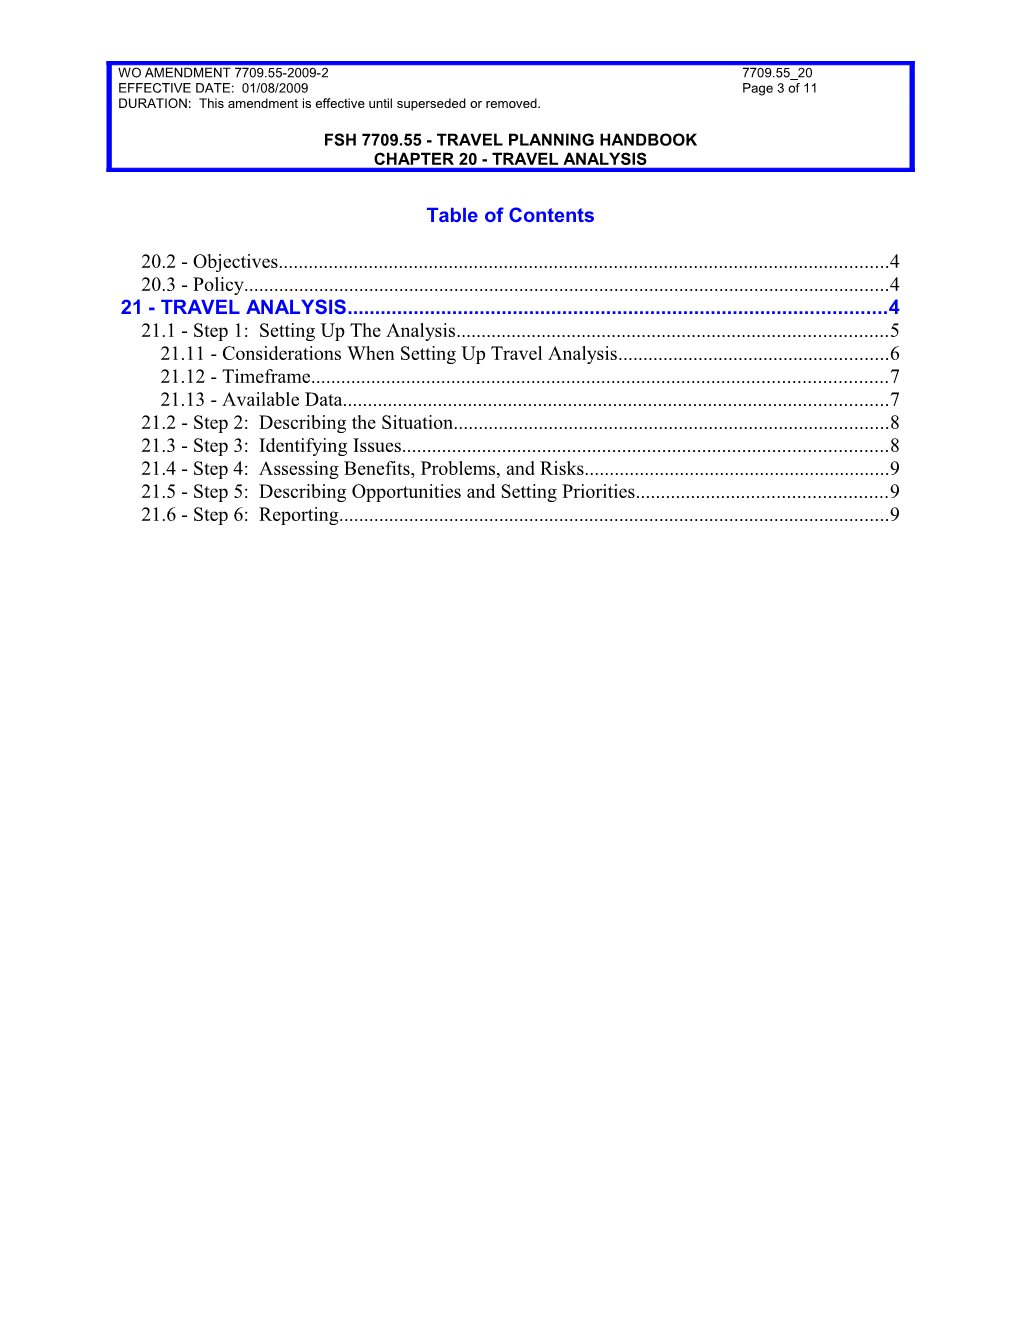 Fsh 7709.55 - Travel Planning Handbook